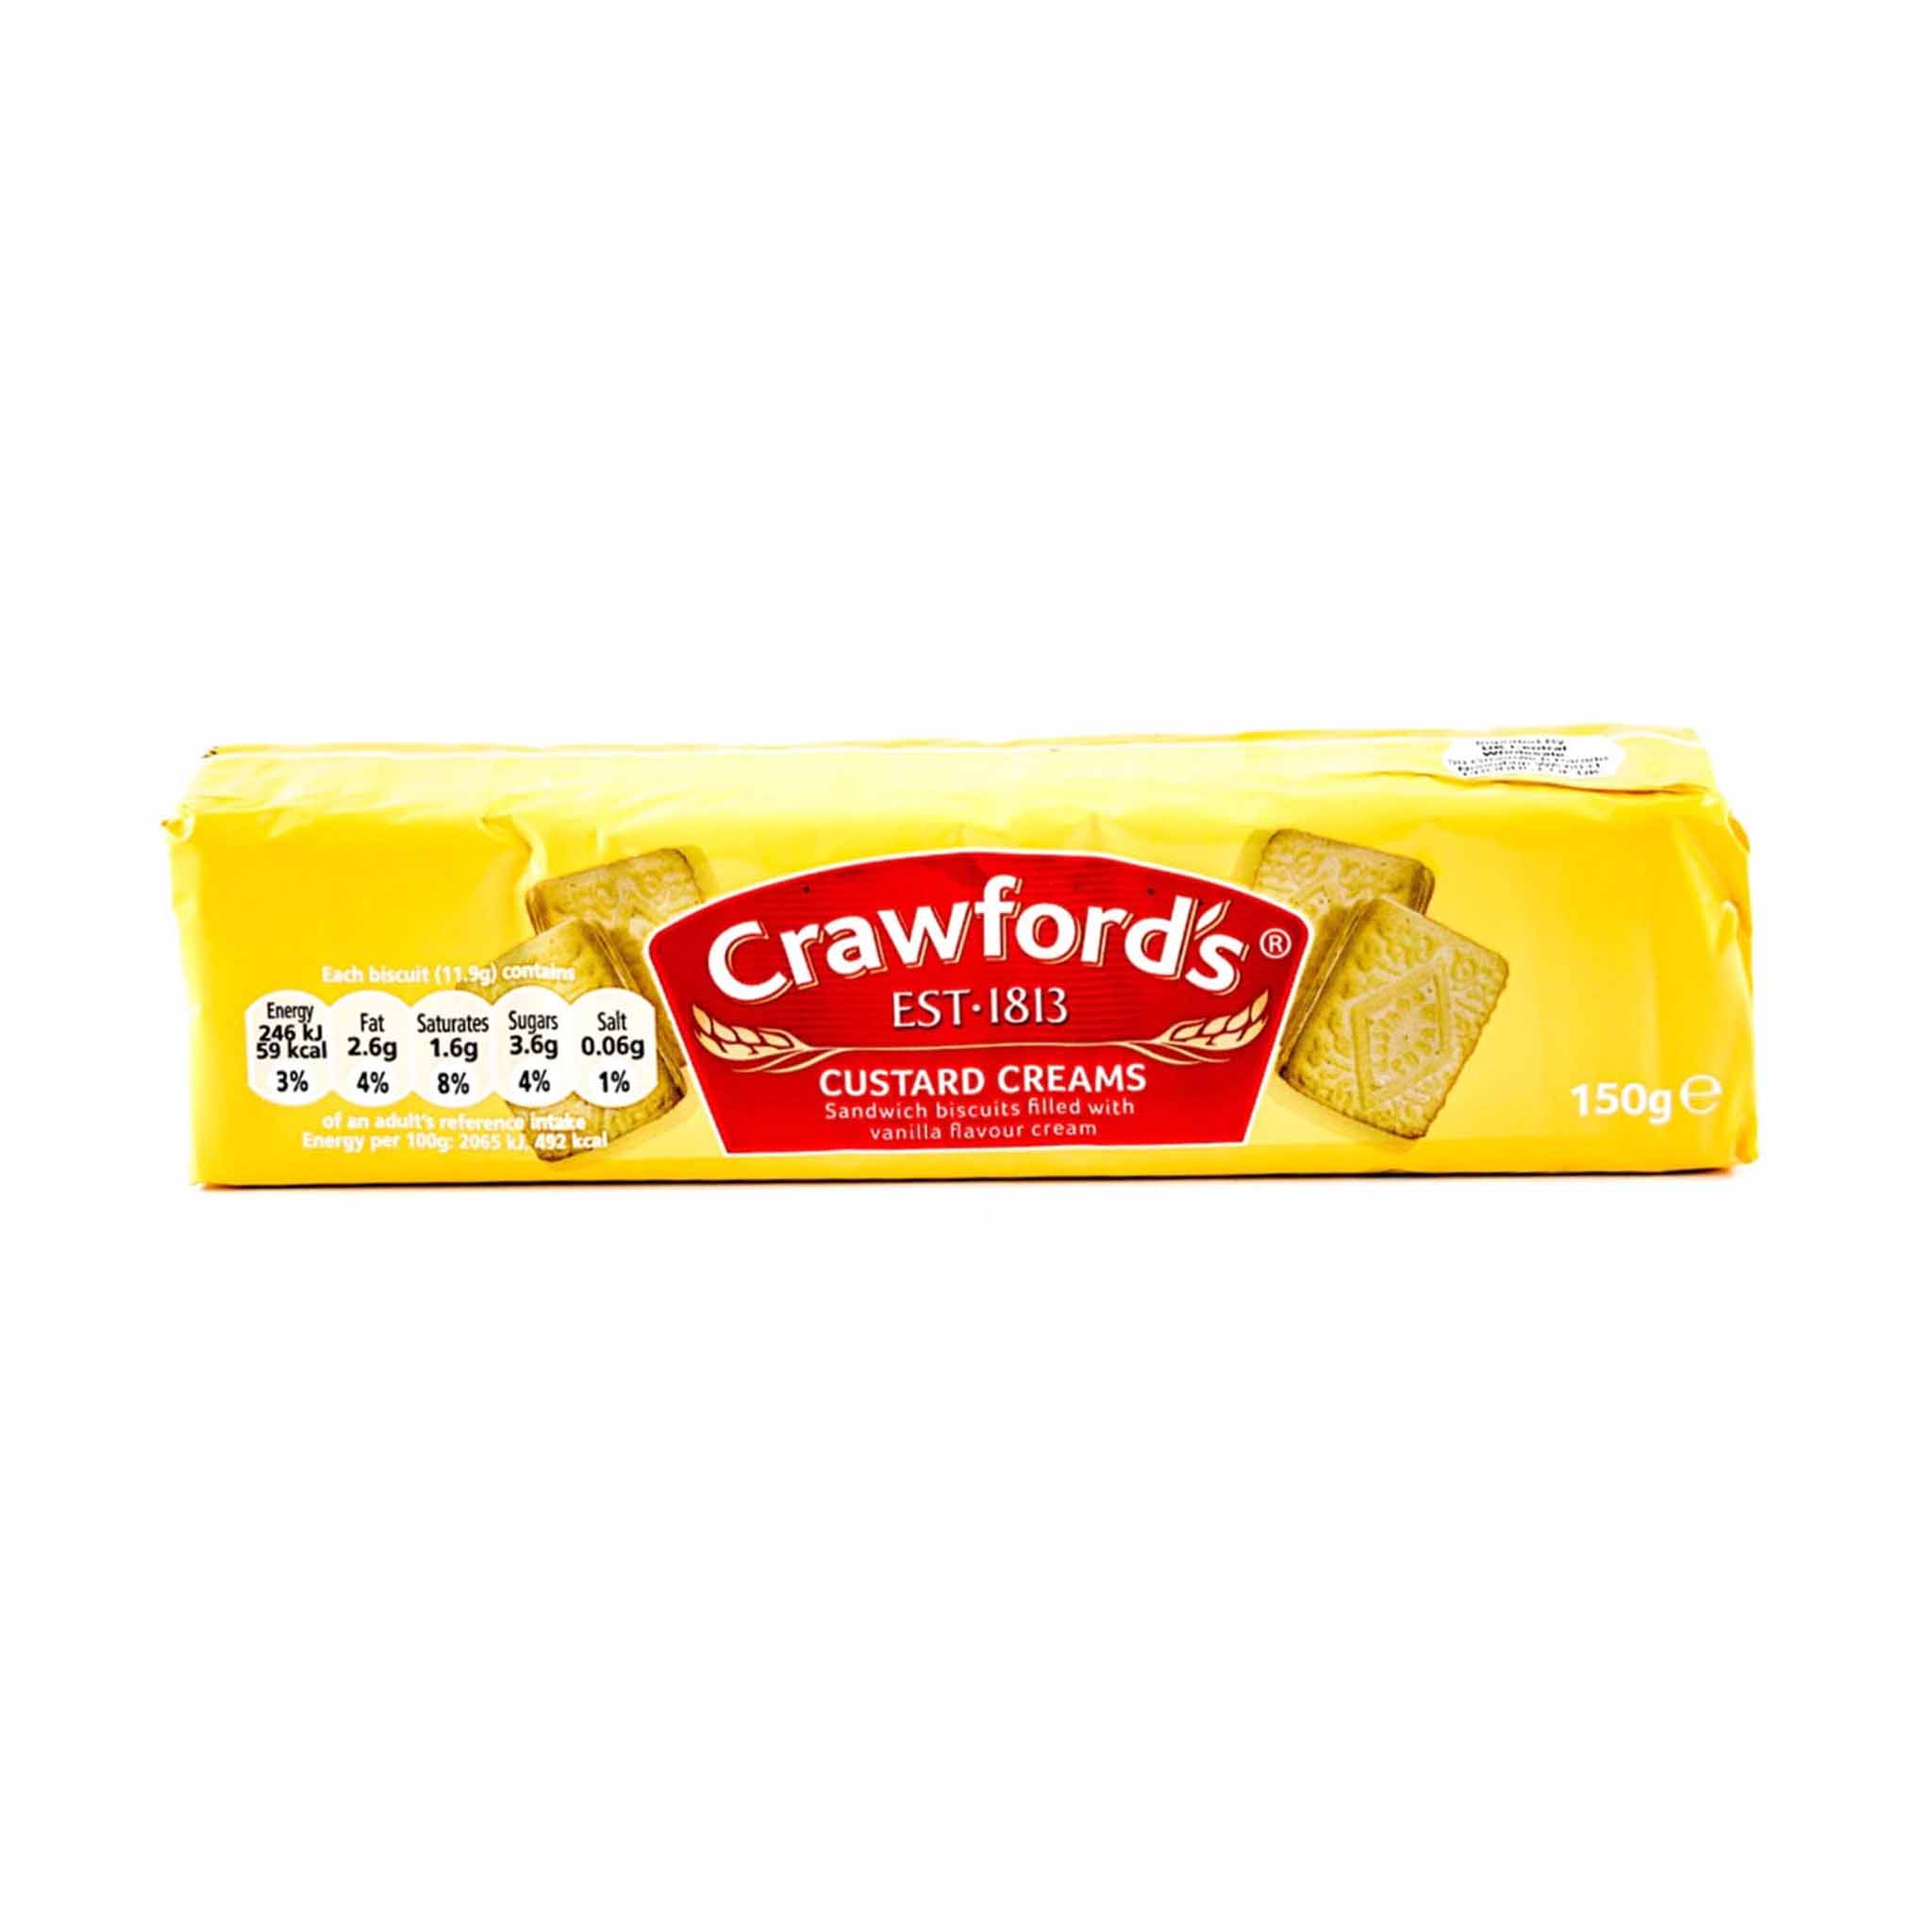 CRAWFORD'S CUSTARD CREAM 150g